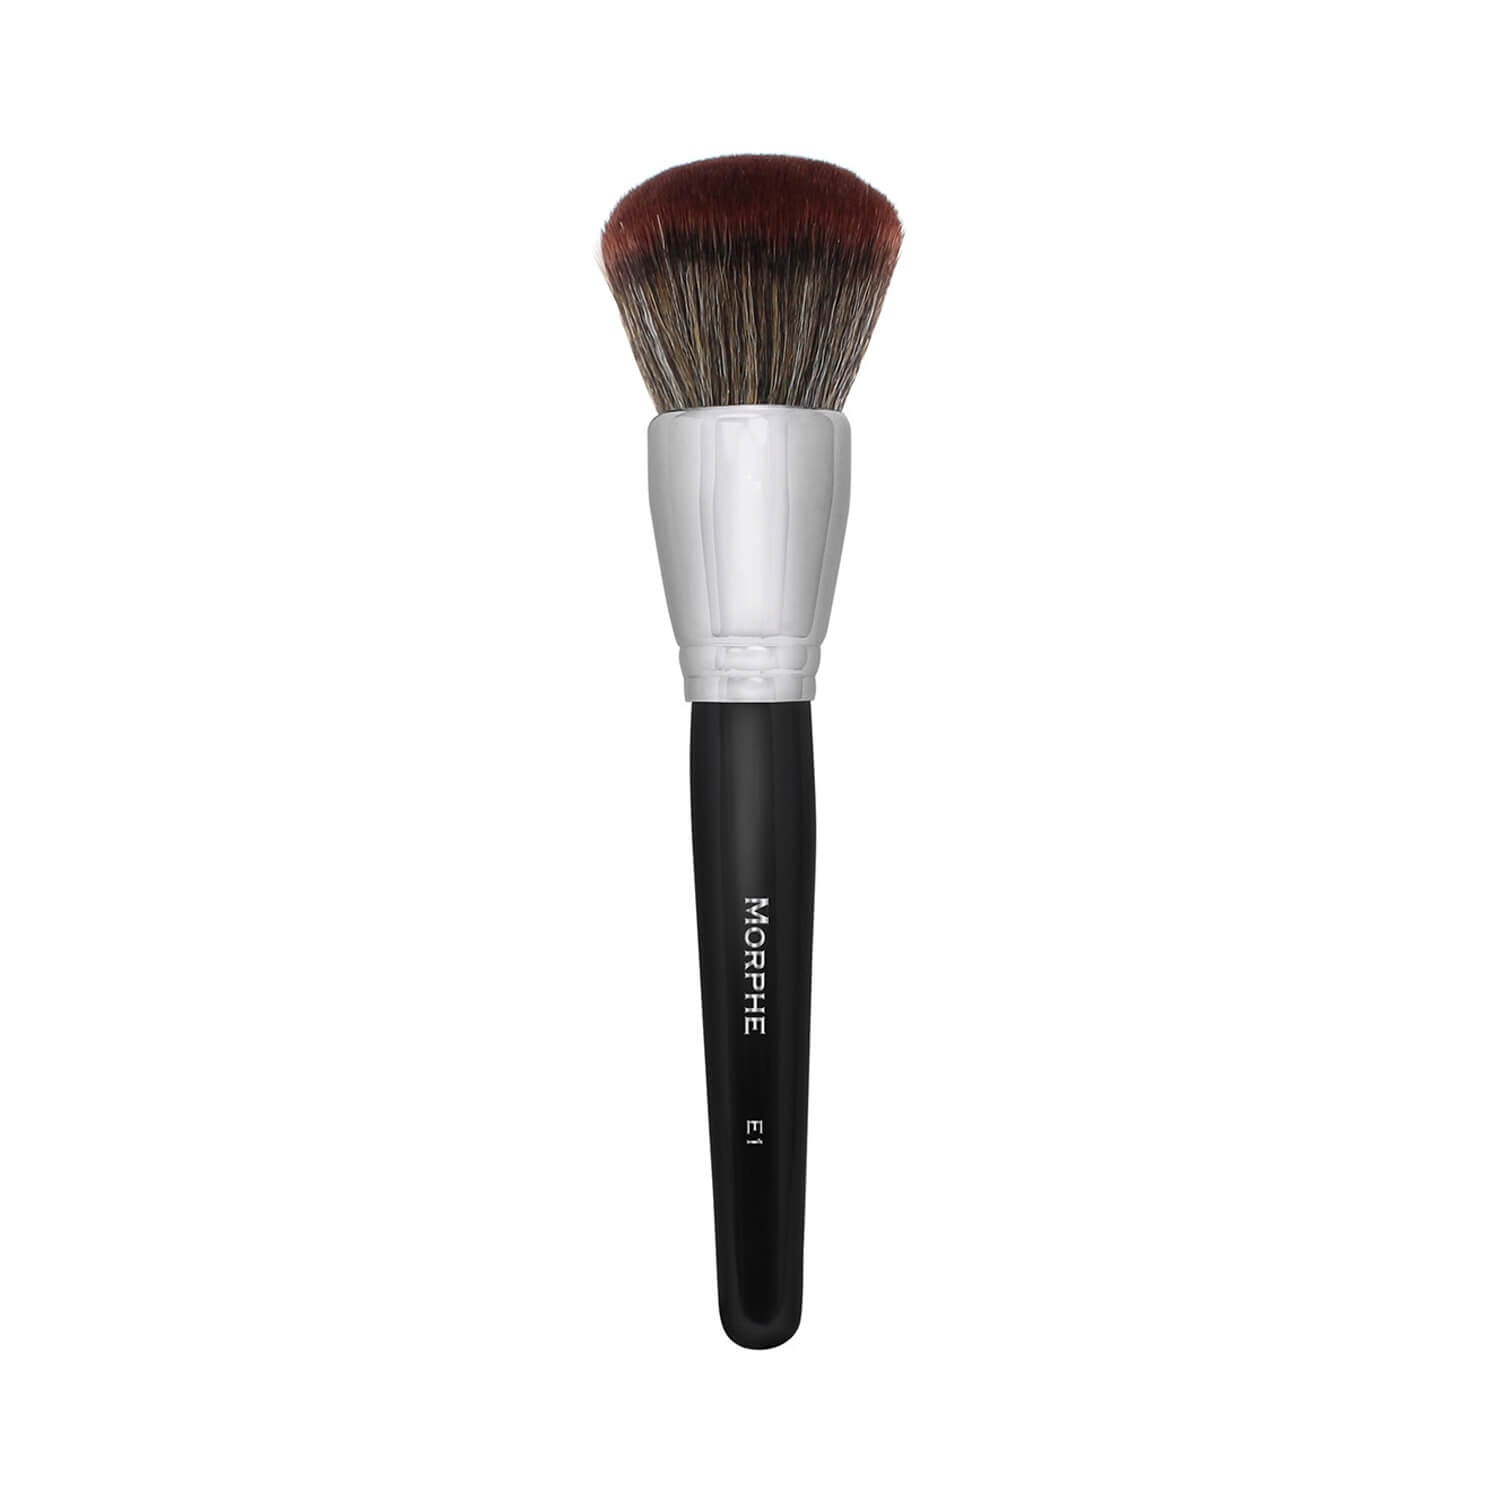 Morphe Cosmetics E1 Deluxe Powder Brush